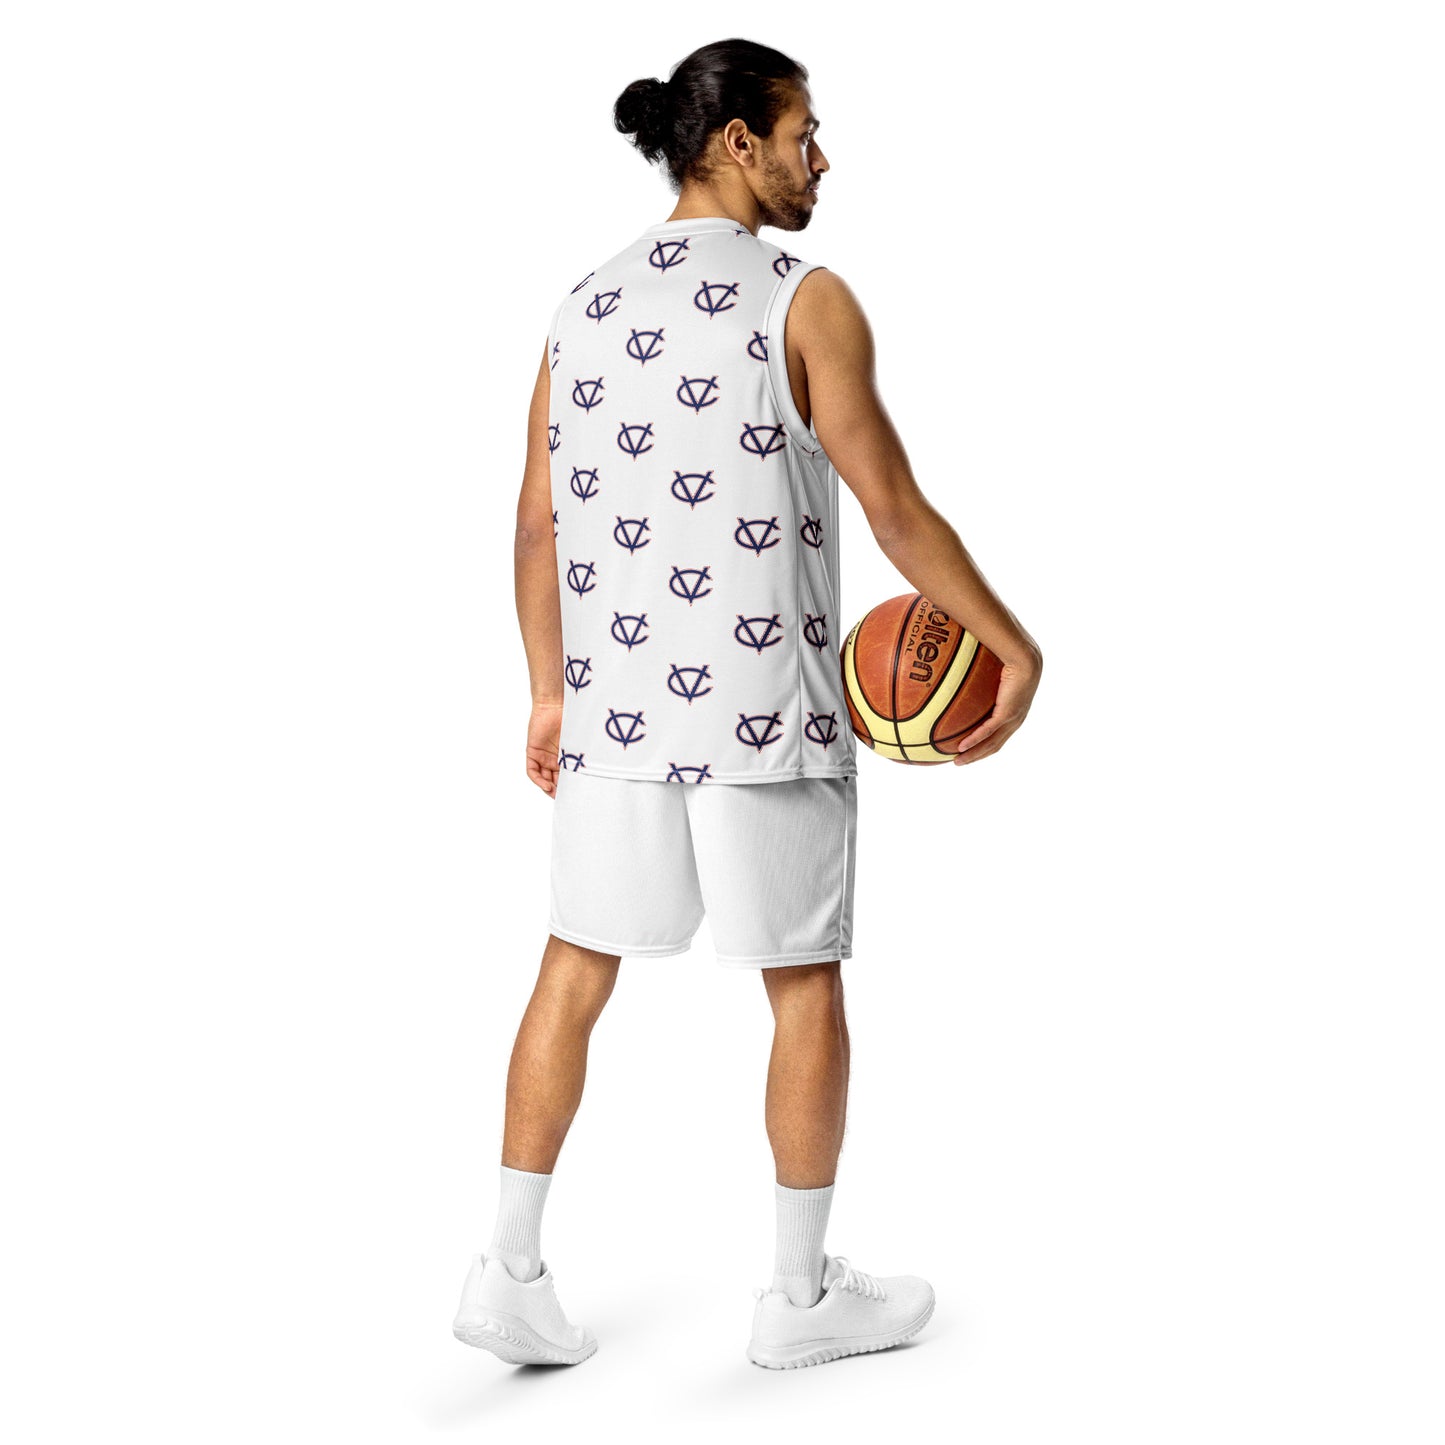 CvLs unisex basketball jersey